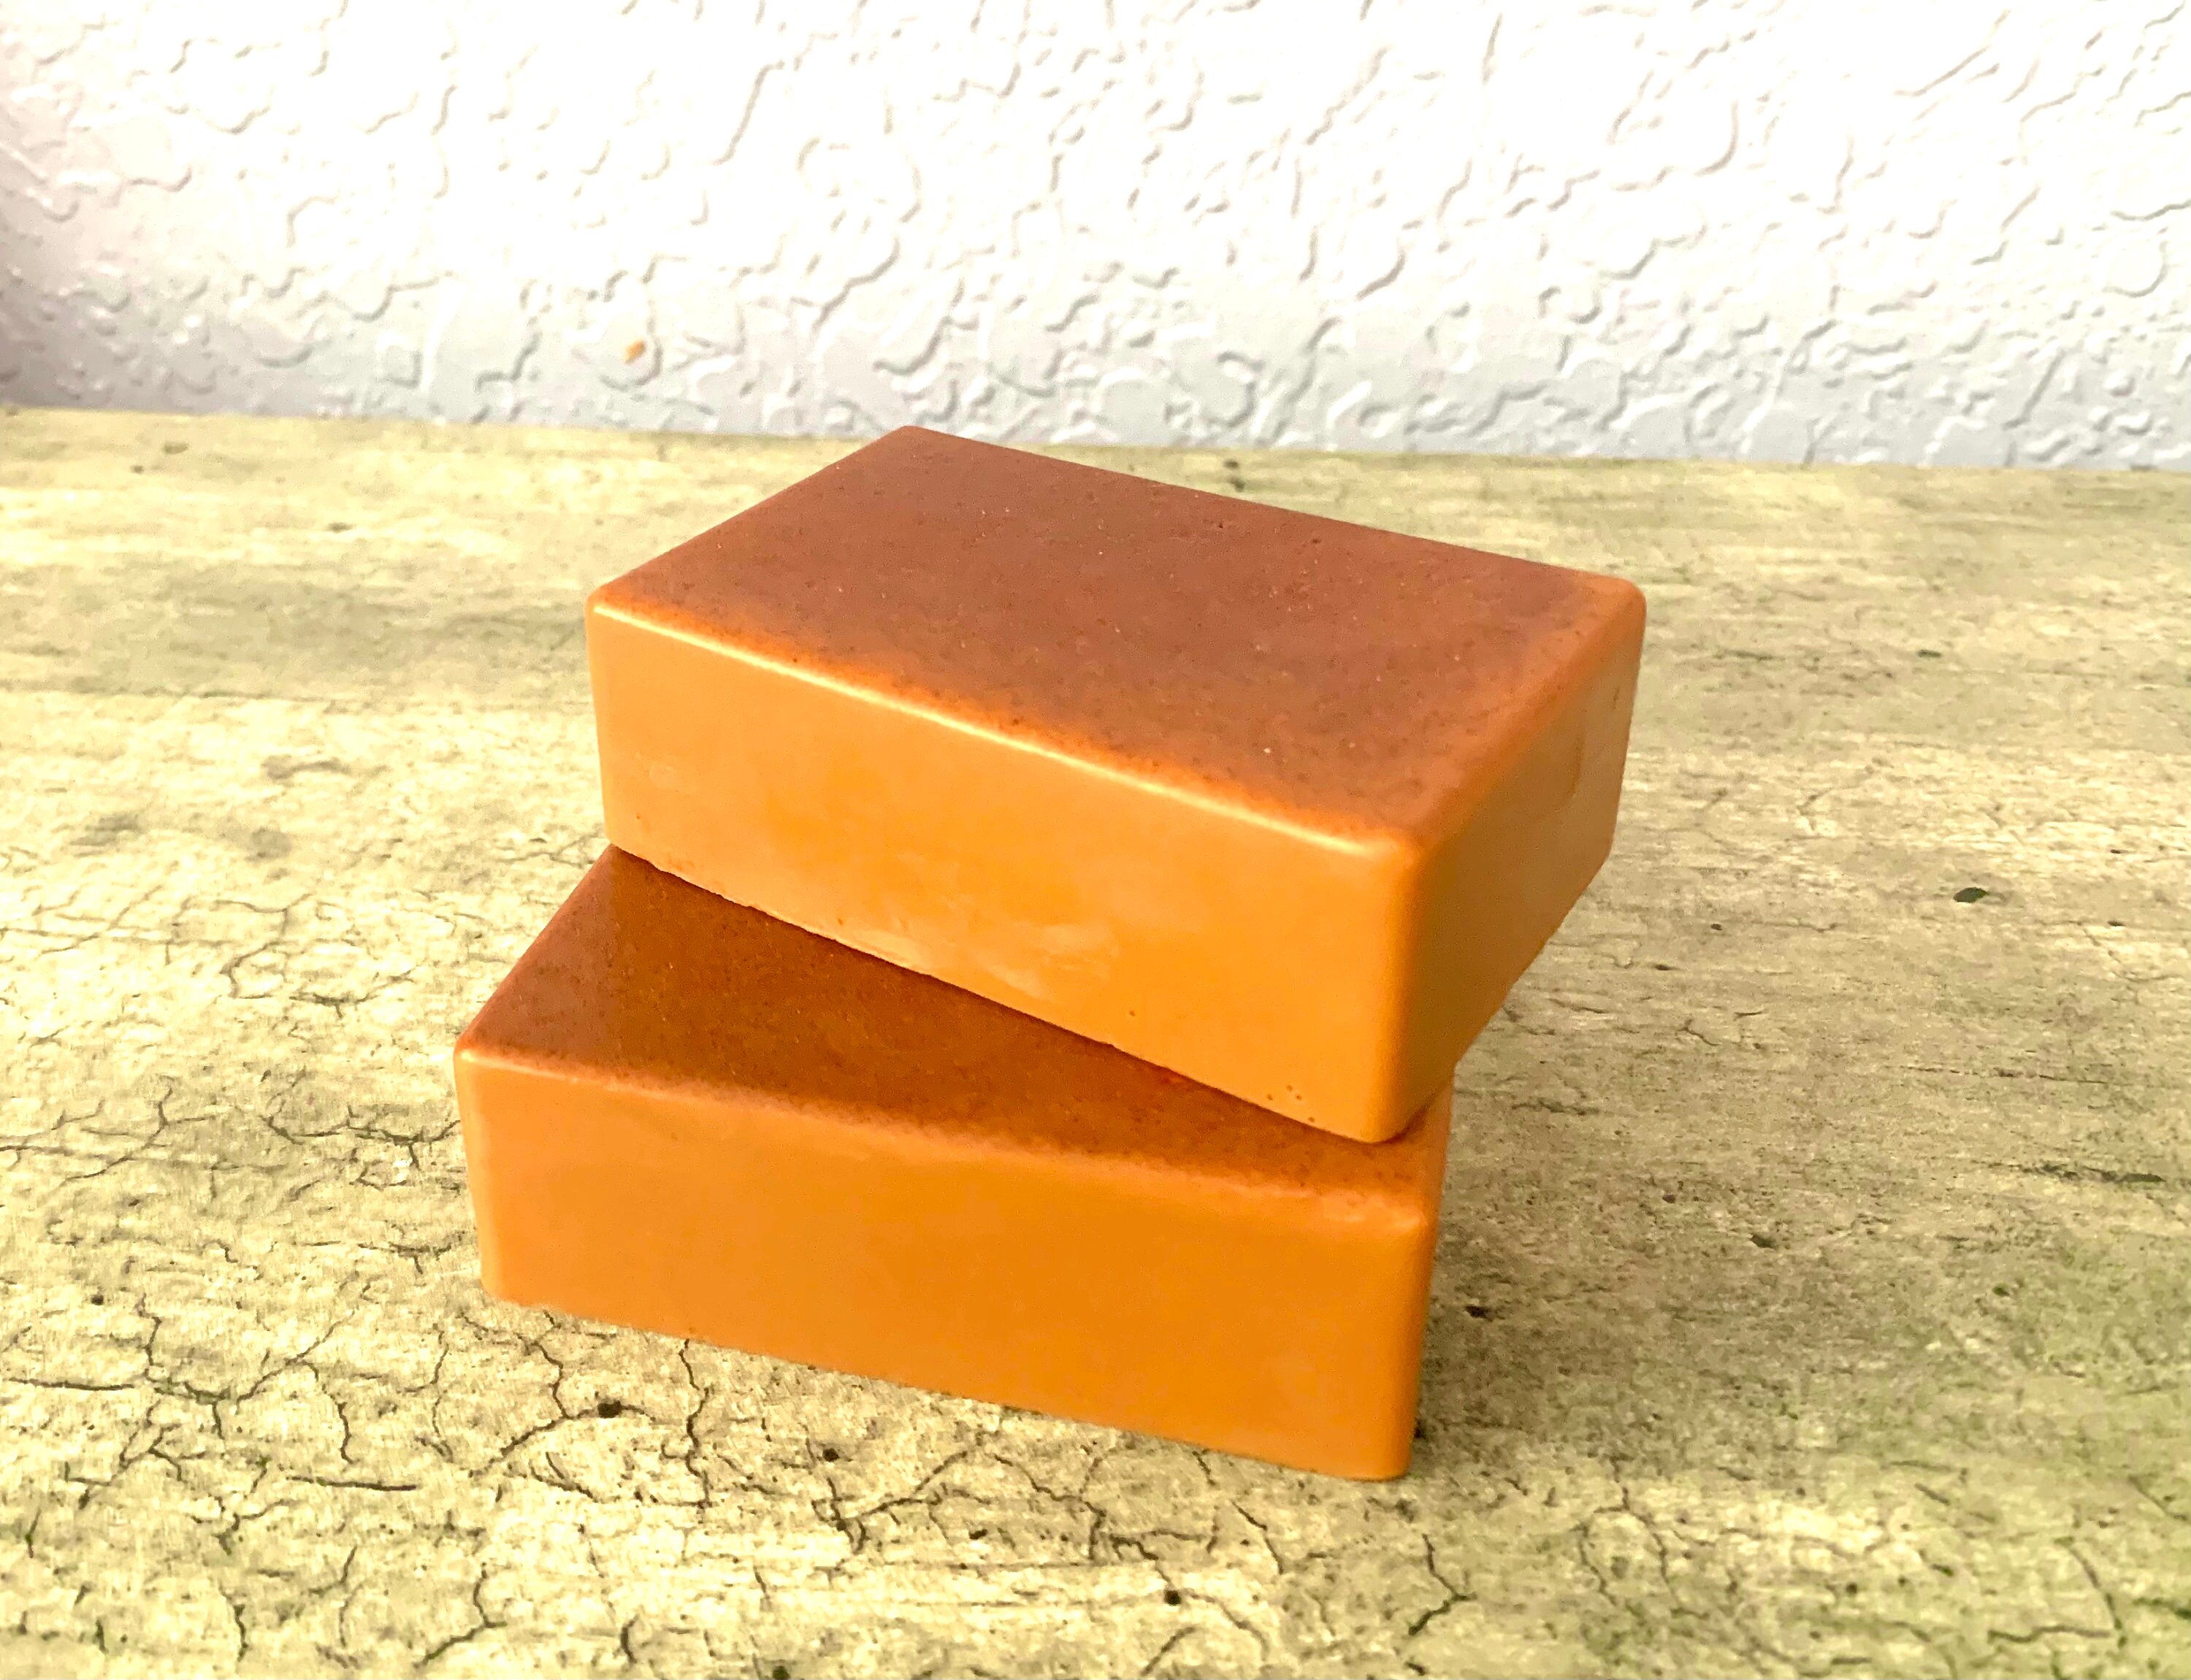 Natural Soap Colors, Sample Set Soap Colorants Supplies, Vegetable Powders  Charcoal Alkanet Beet Root Indigo Madder Orange Rose Hip Parsley 